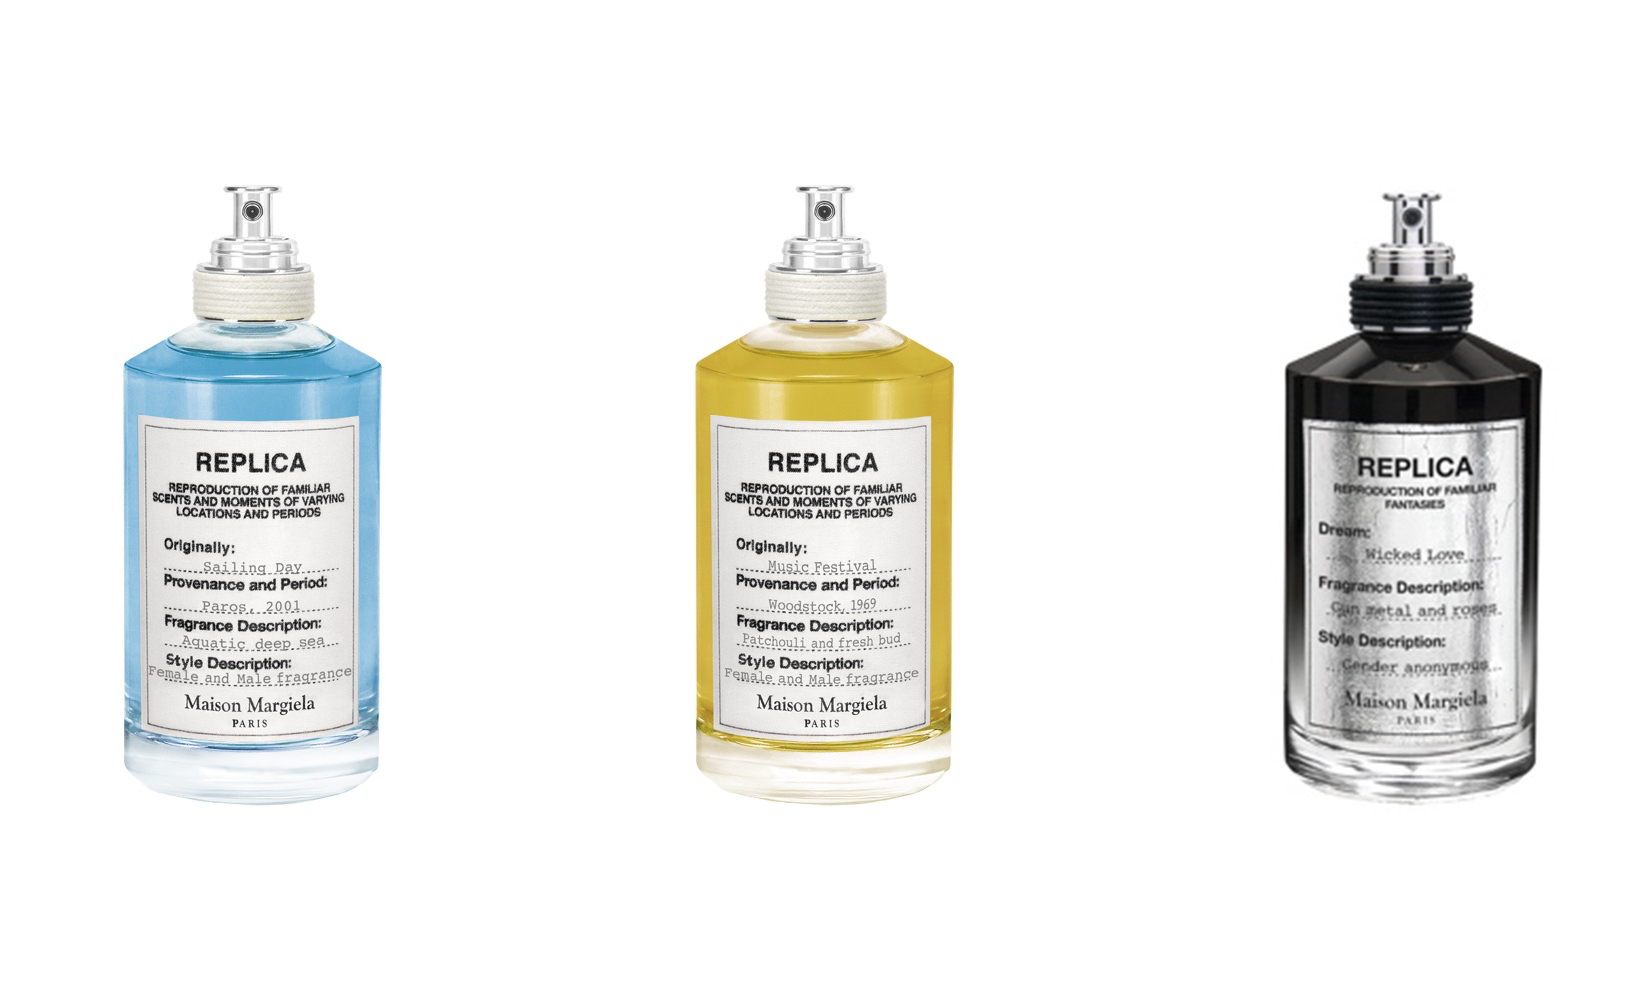 Maison Margiela 经典香水 “REPLICA” 将推出 3 款新香